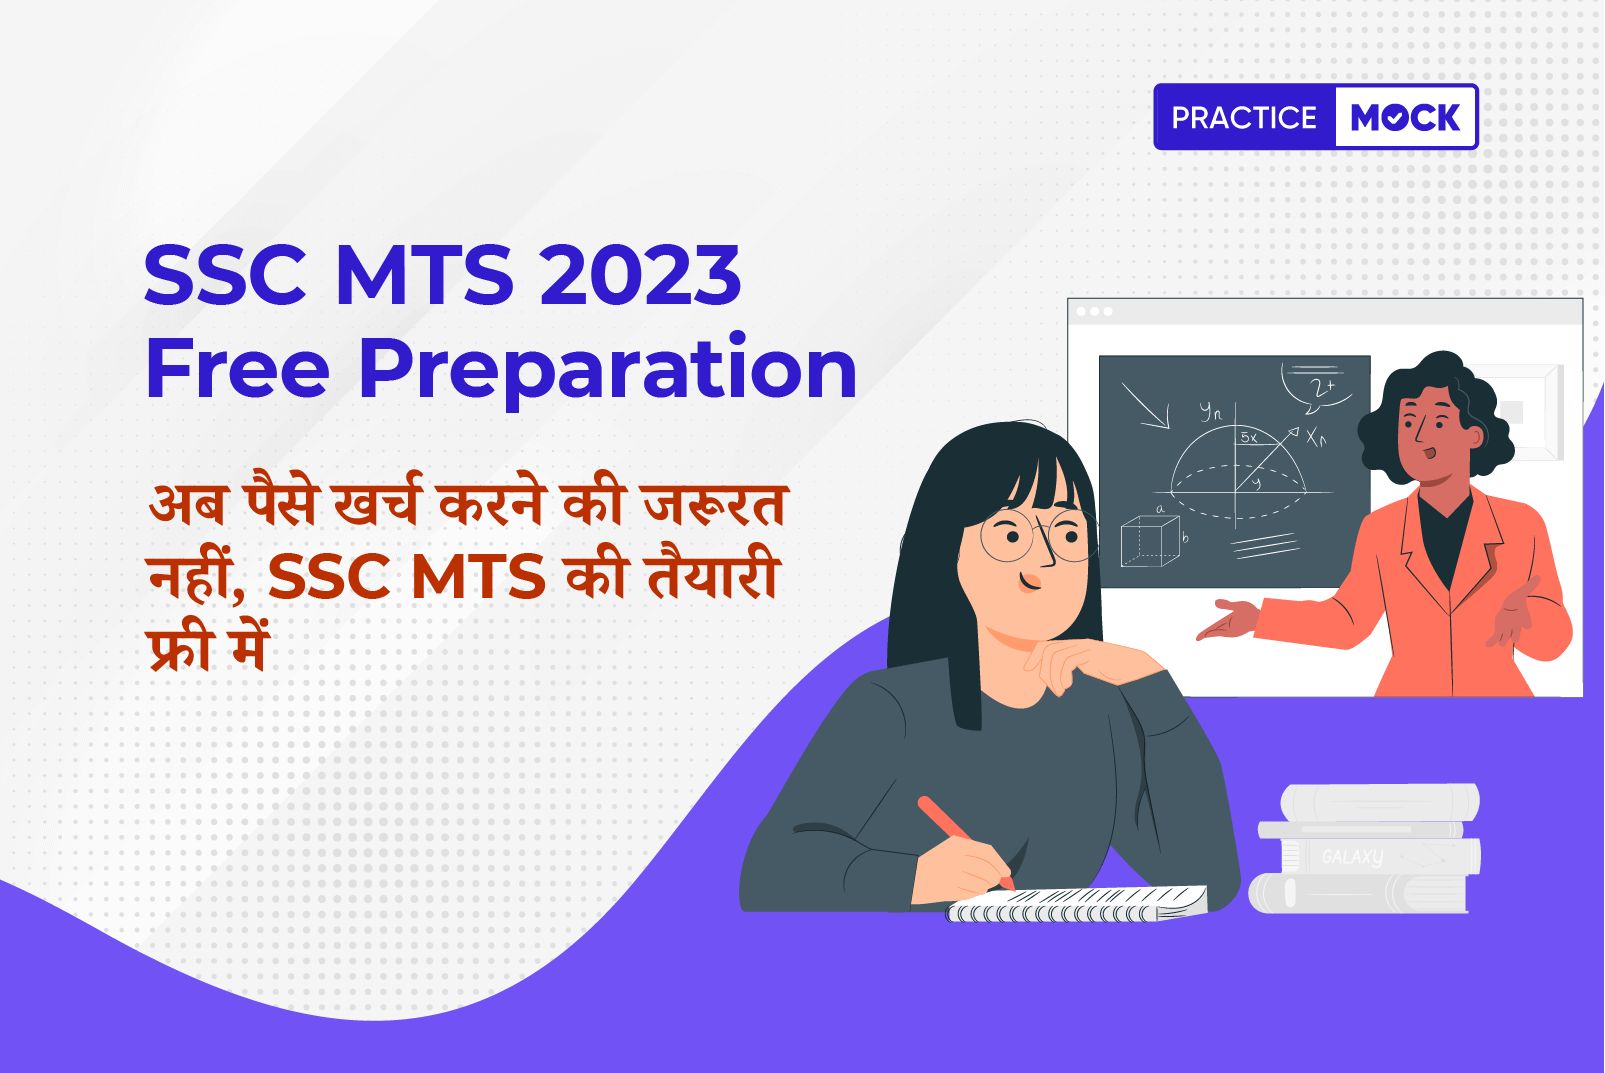 SSC MTS 2023 Free Preparation